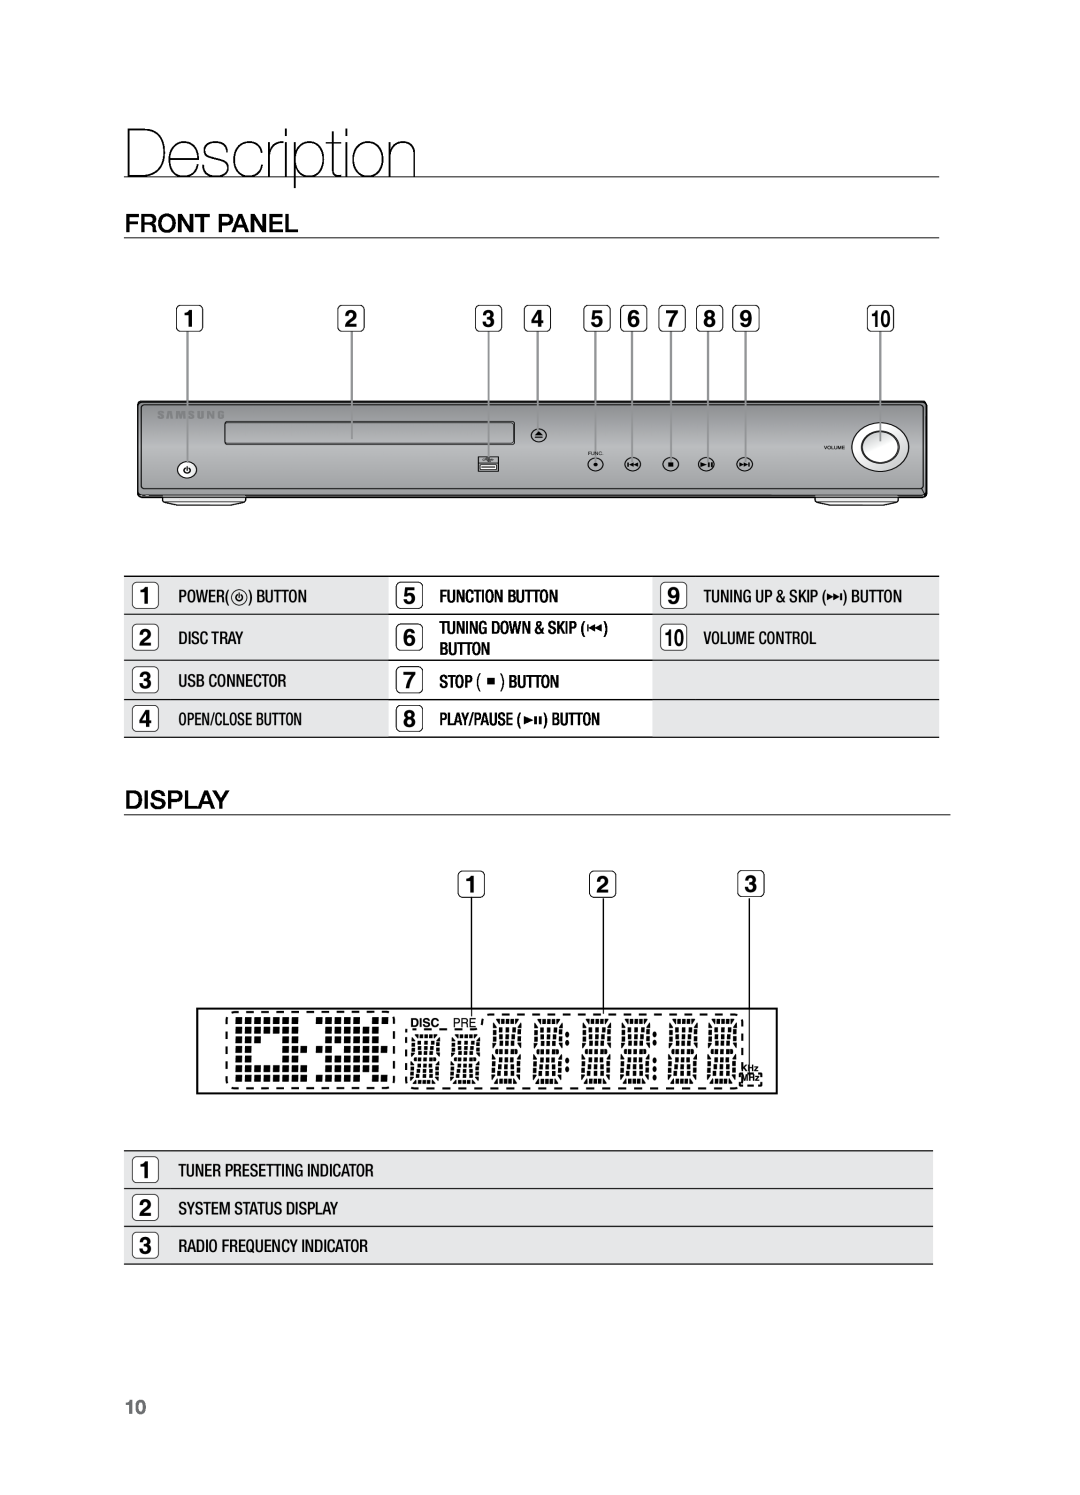 Samsung HT-Z221 user manual Description, Front Panel, Display 